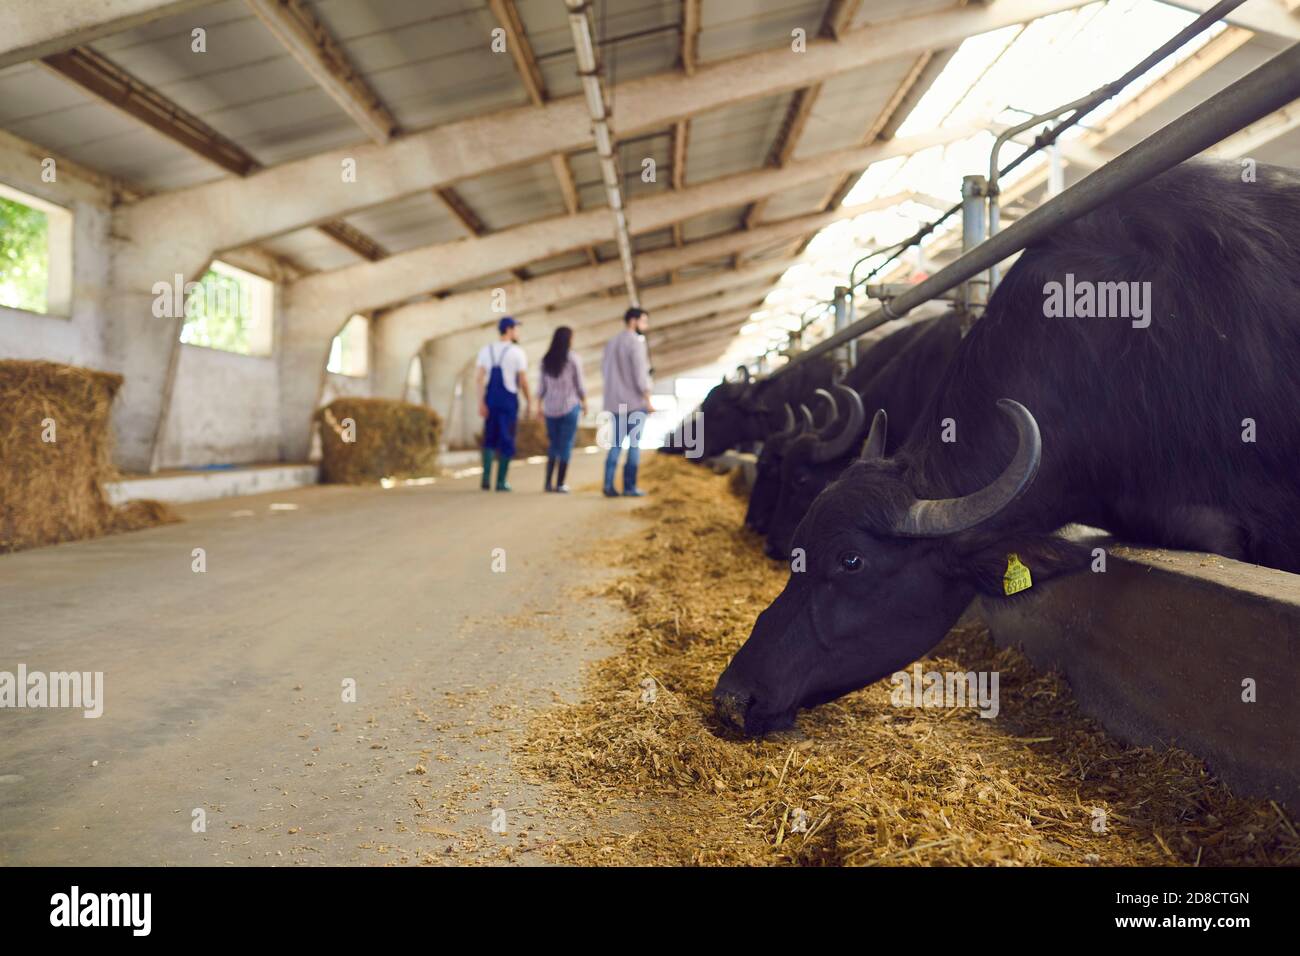 Italian Mediterranean buffaloes eat hay while people walk near them on the farm. Stock Photo